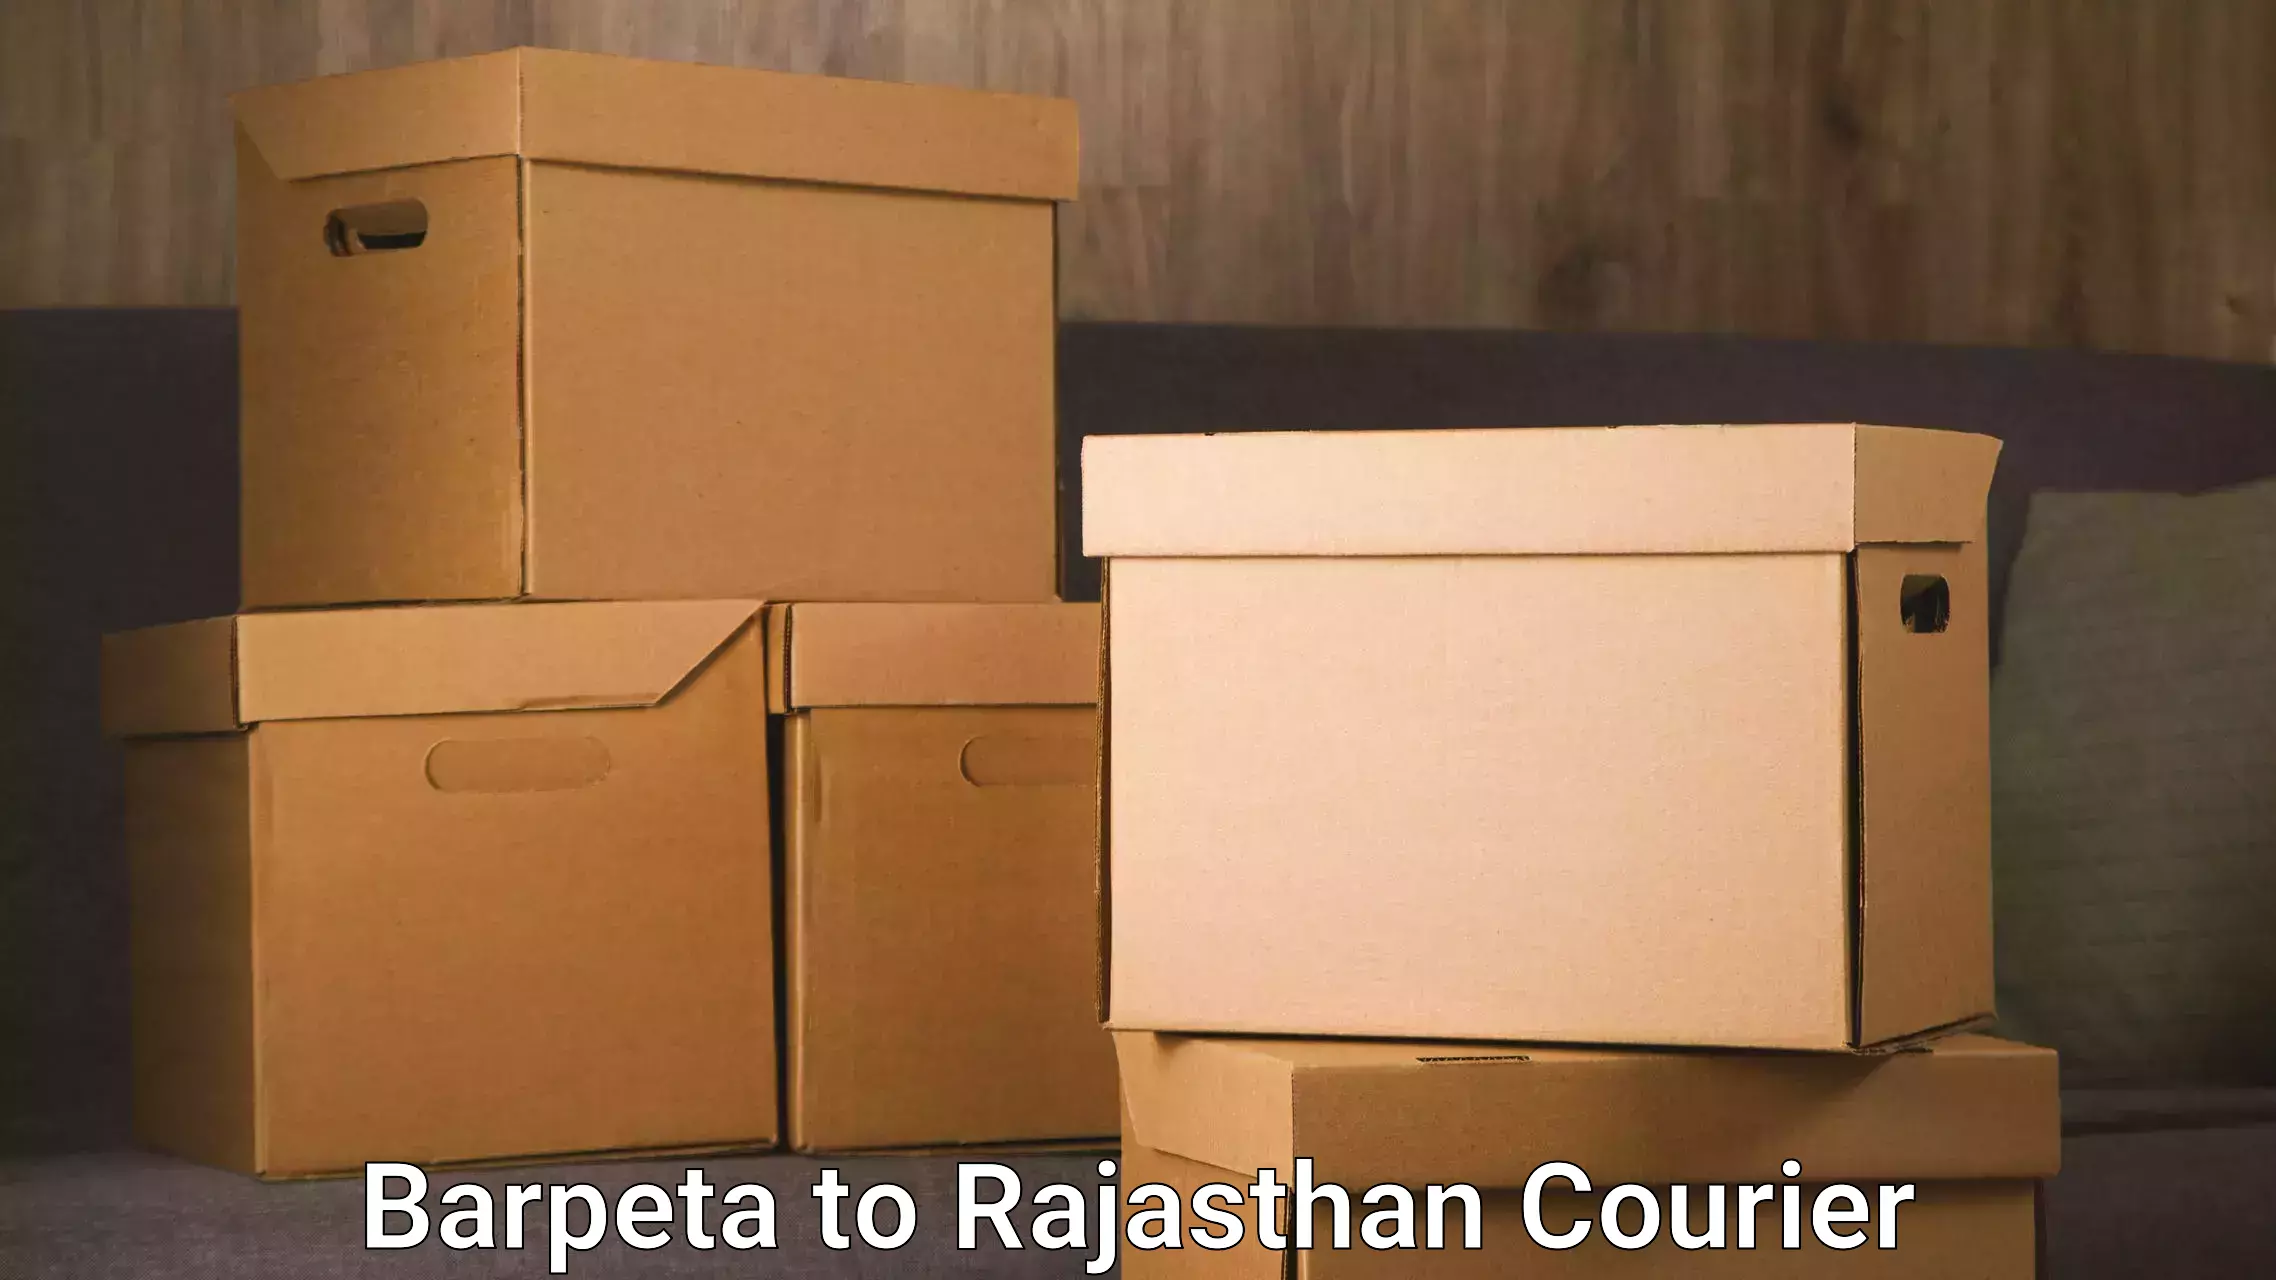 Efficient order fulfillment Barpeta to Jodhpur